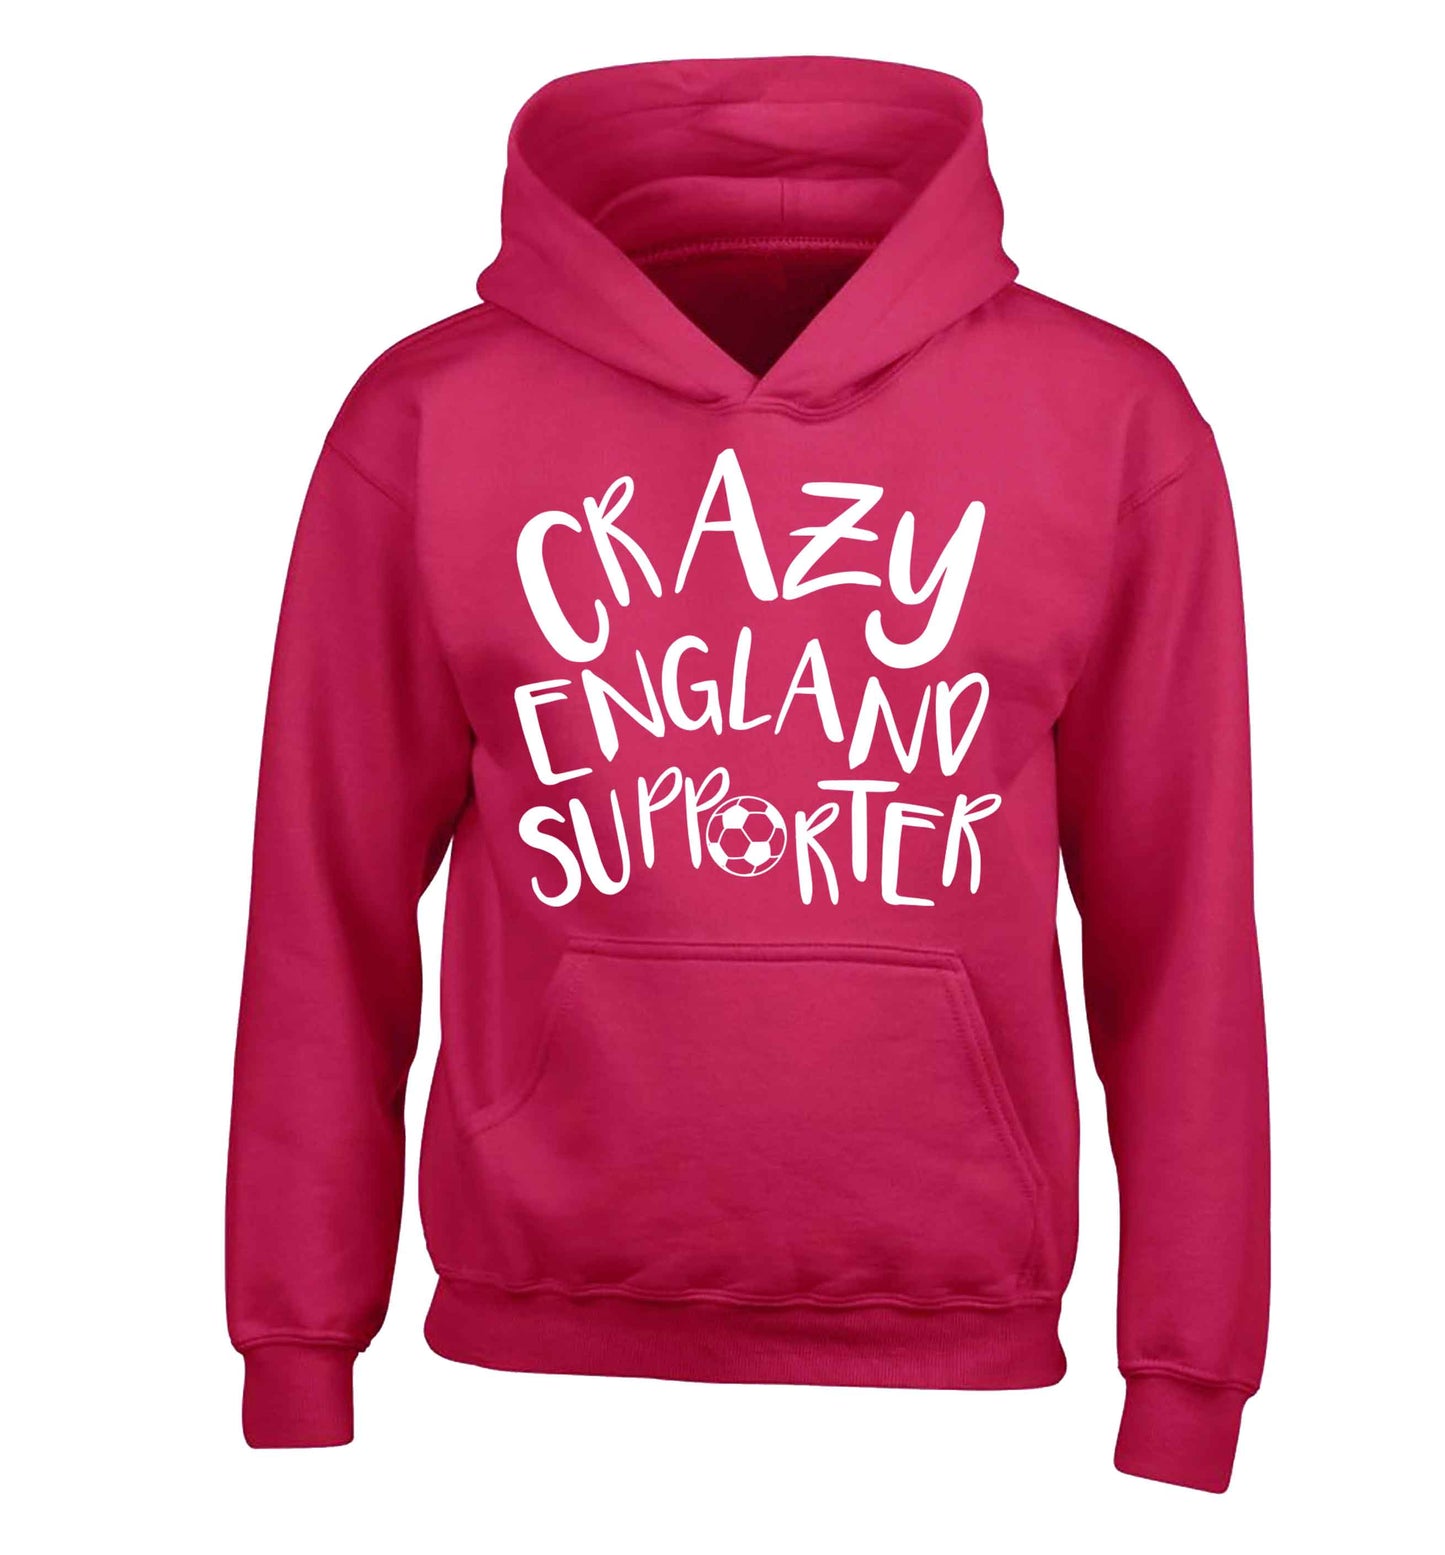 Crazy England supporter children's pink hoodie 12-13 Years